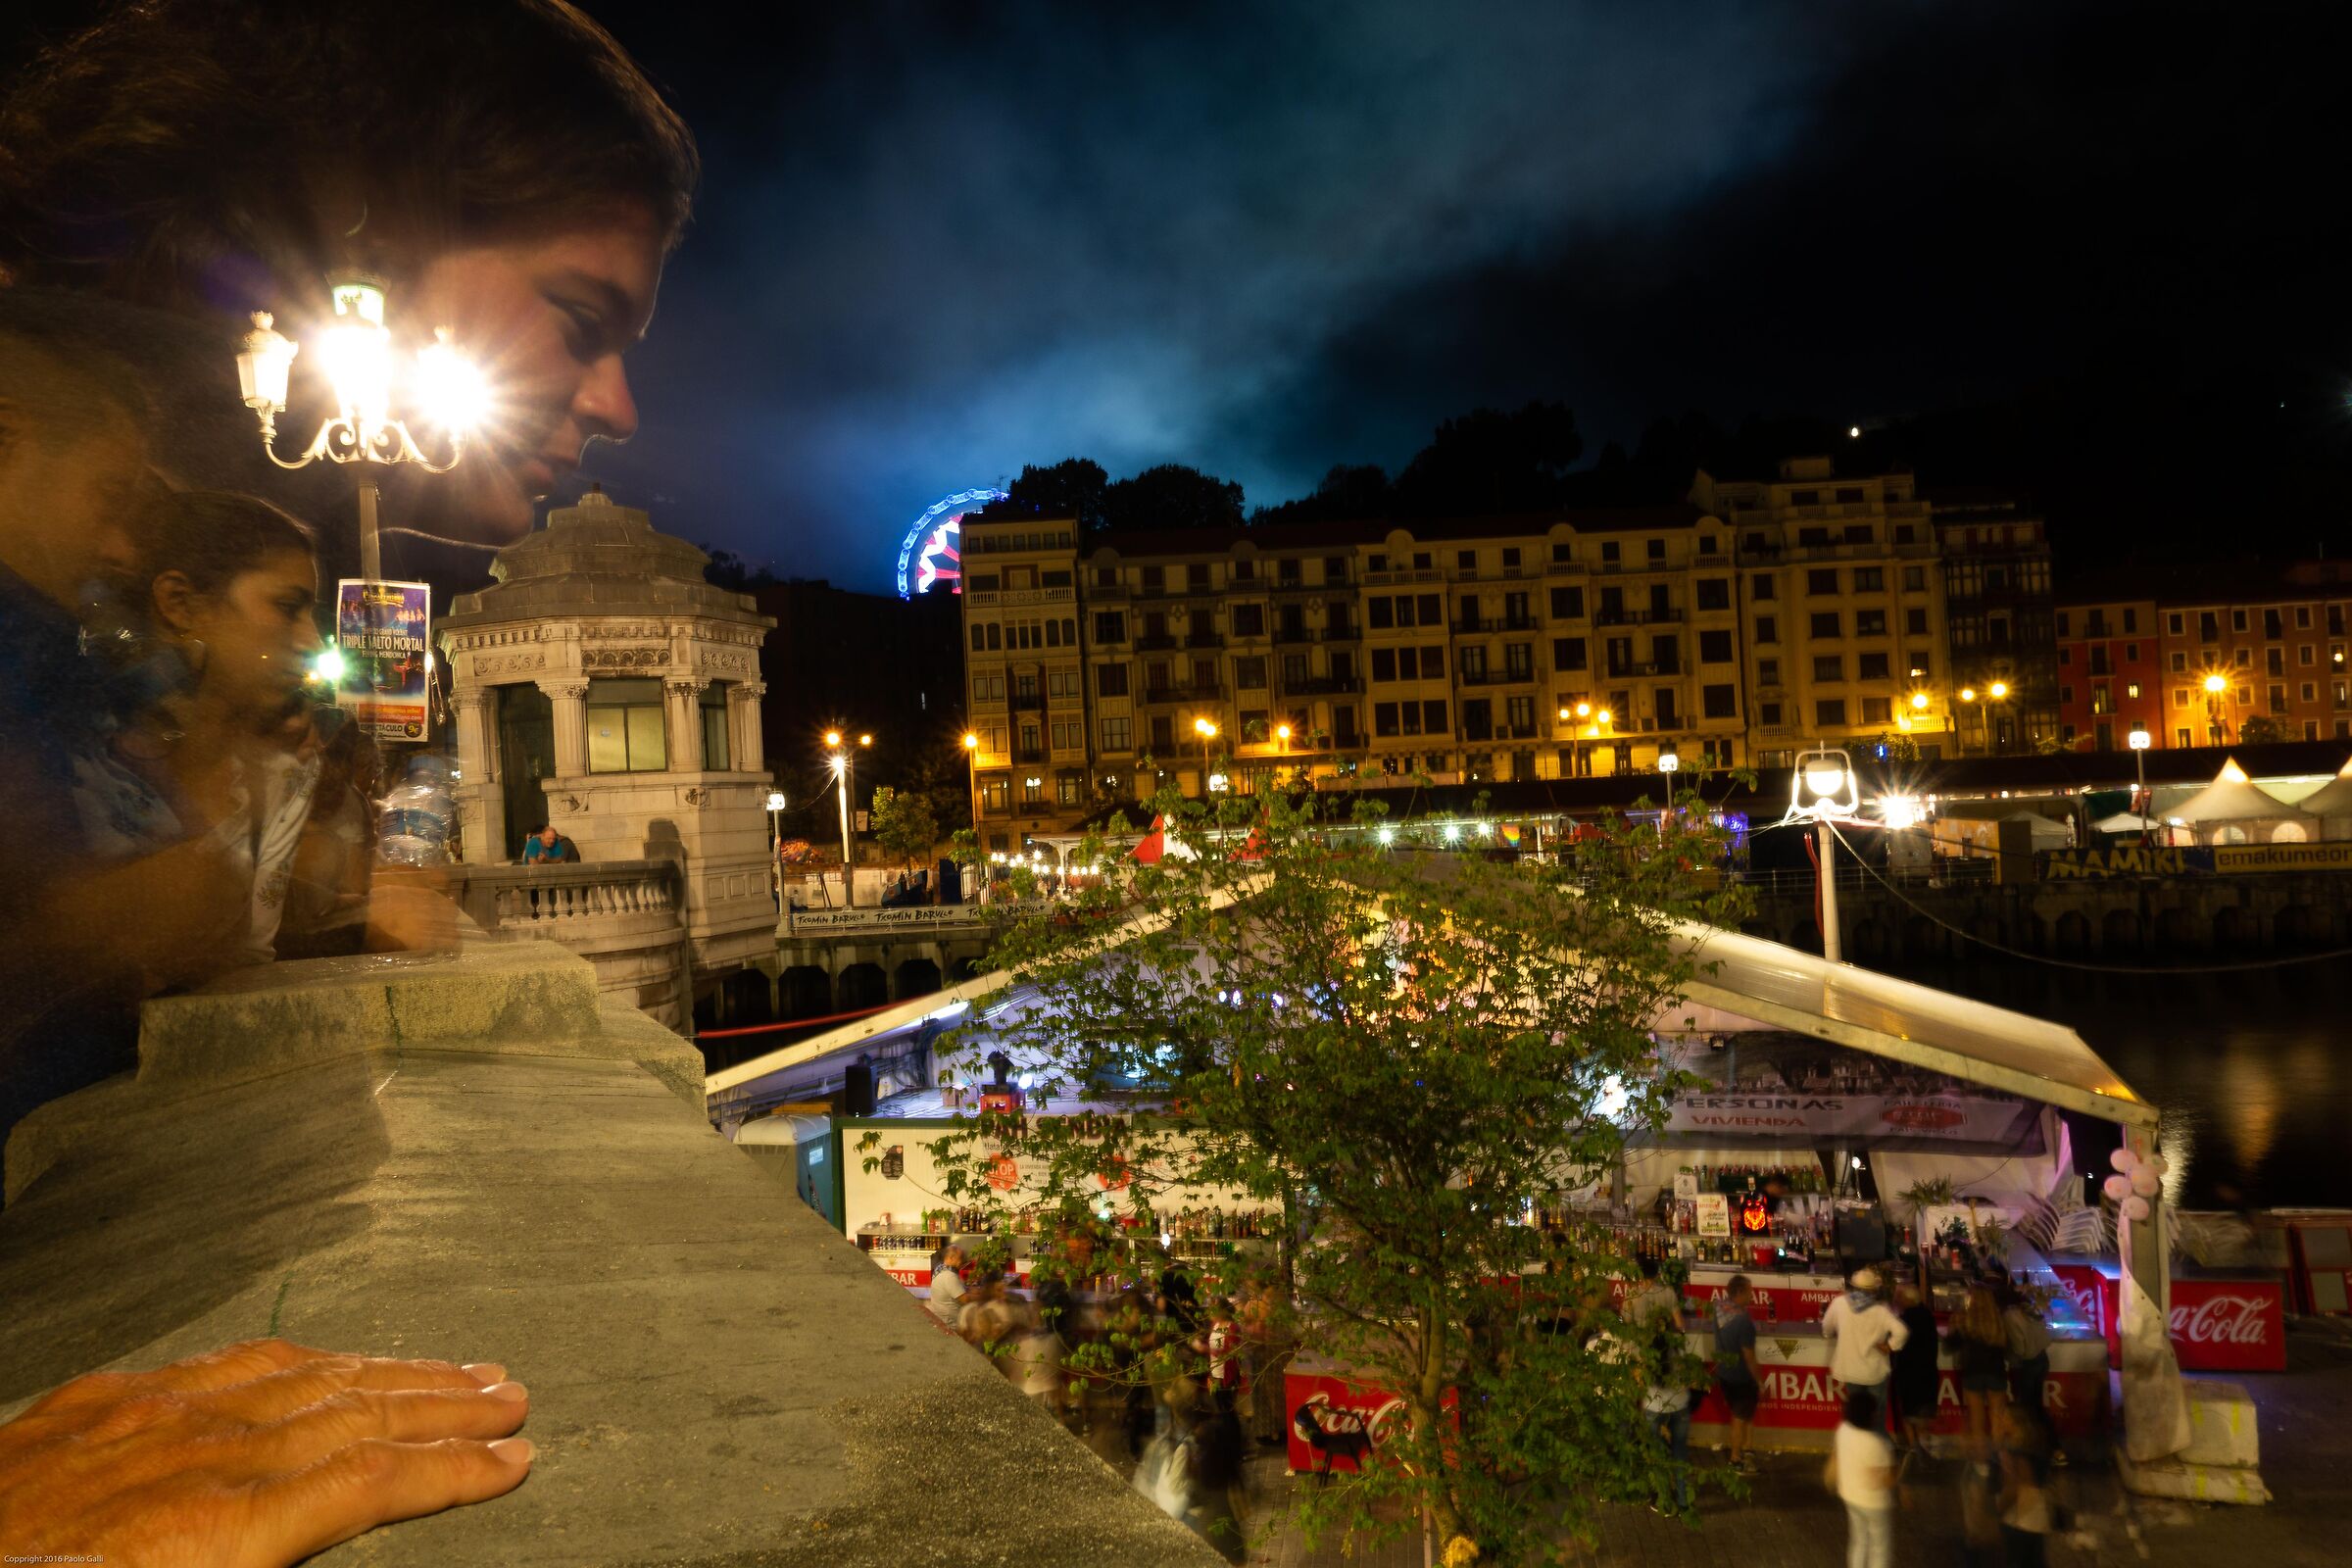 Night in Bilbao...